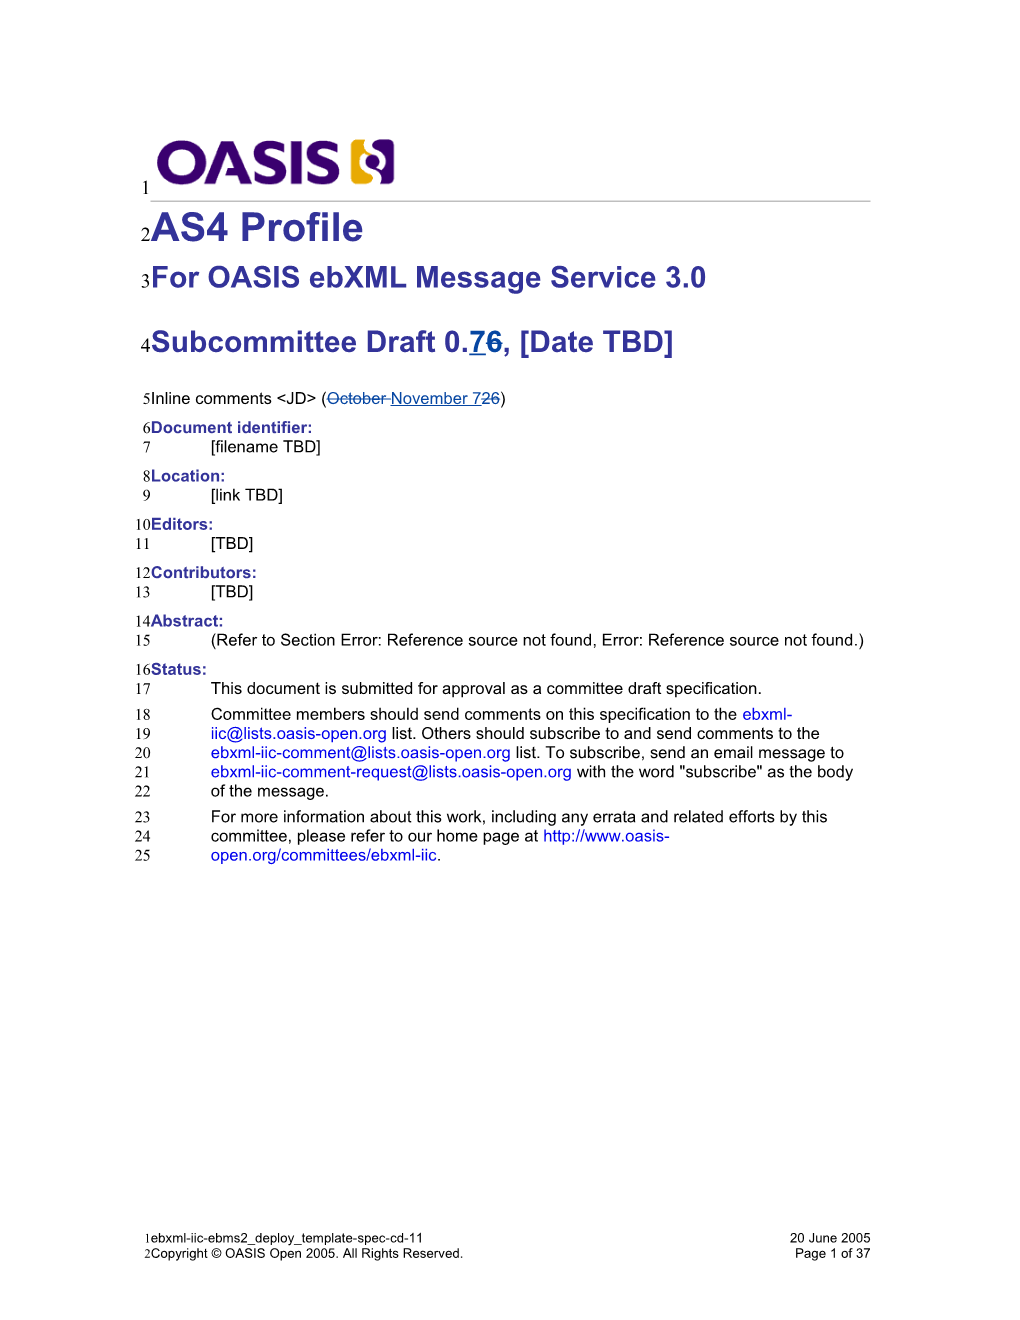 For OASIS Ebxml M Essage Service 3.0